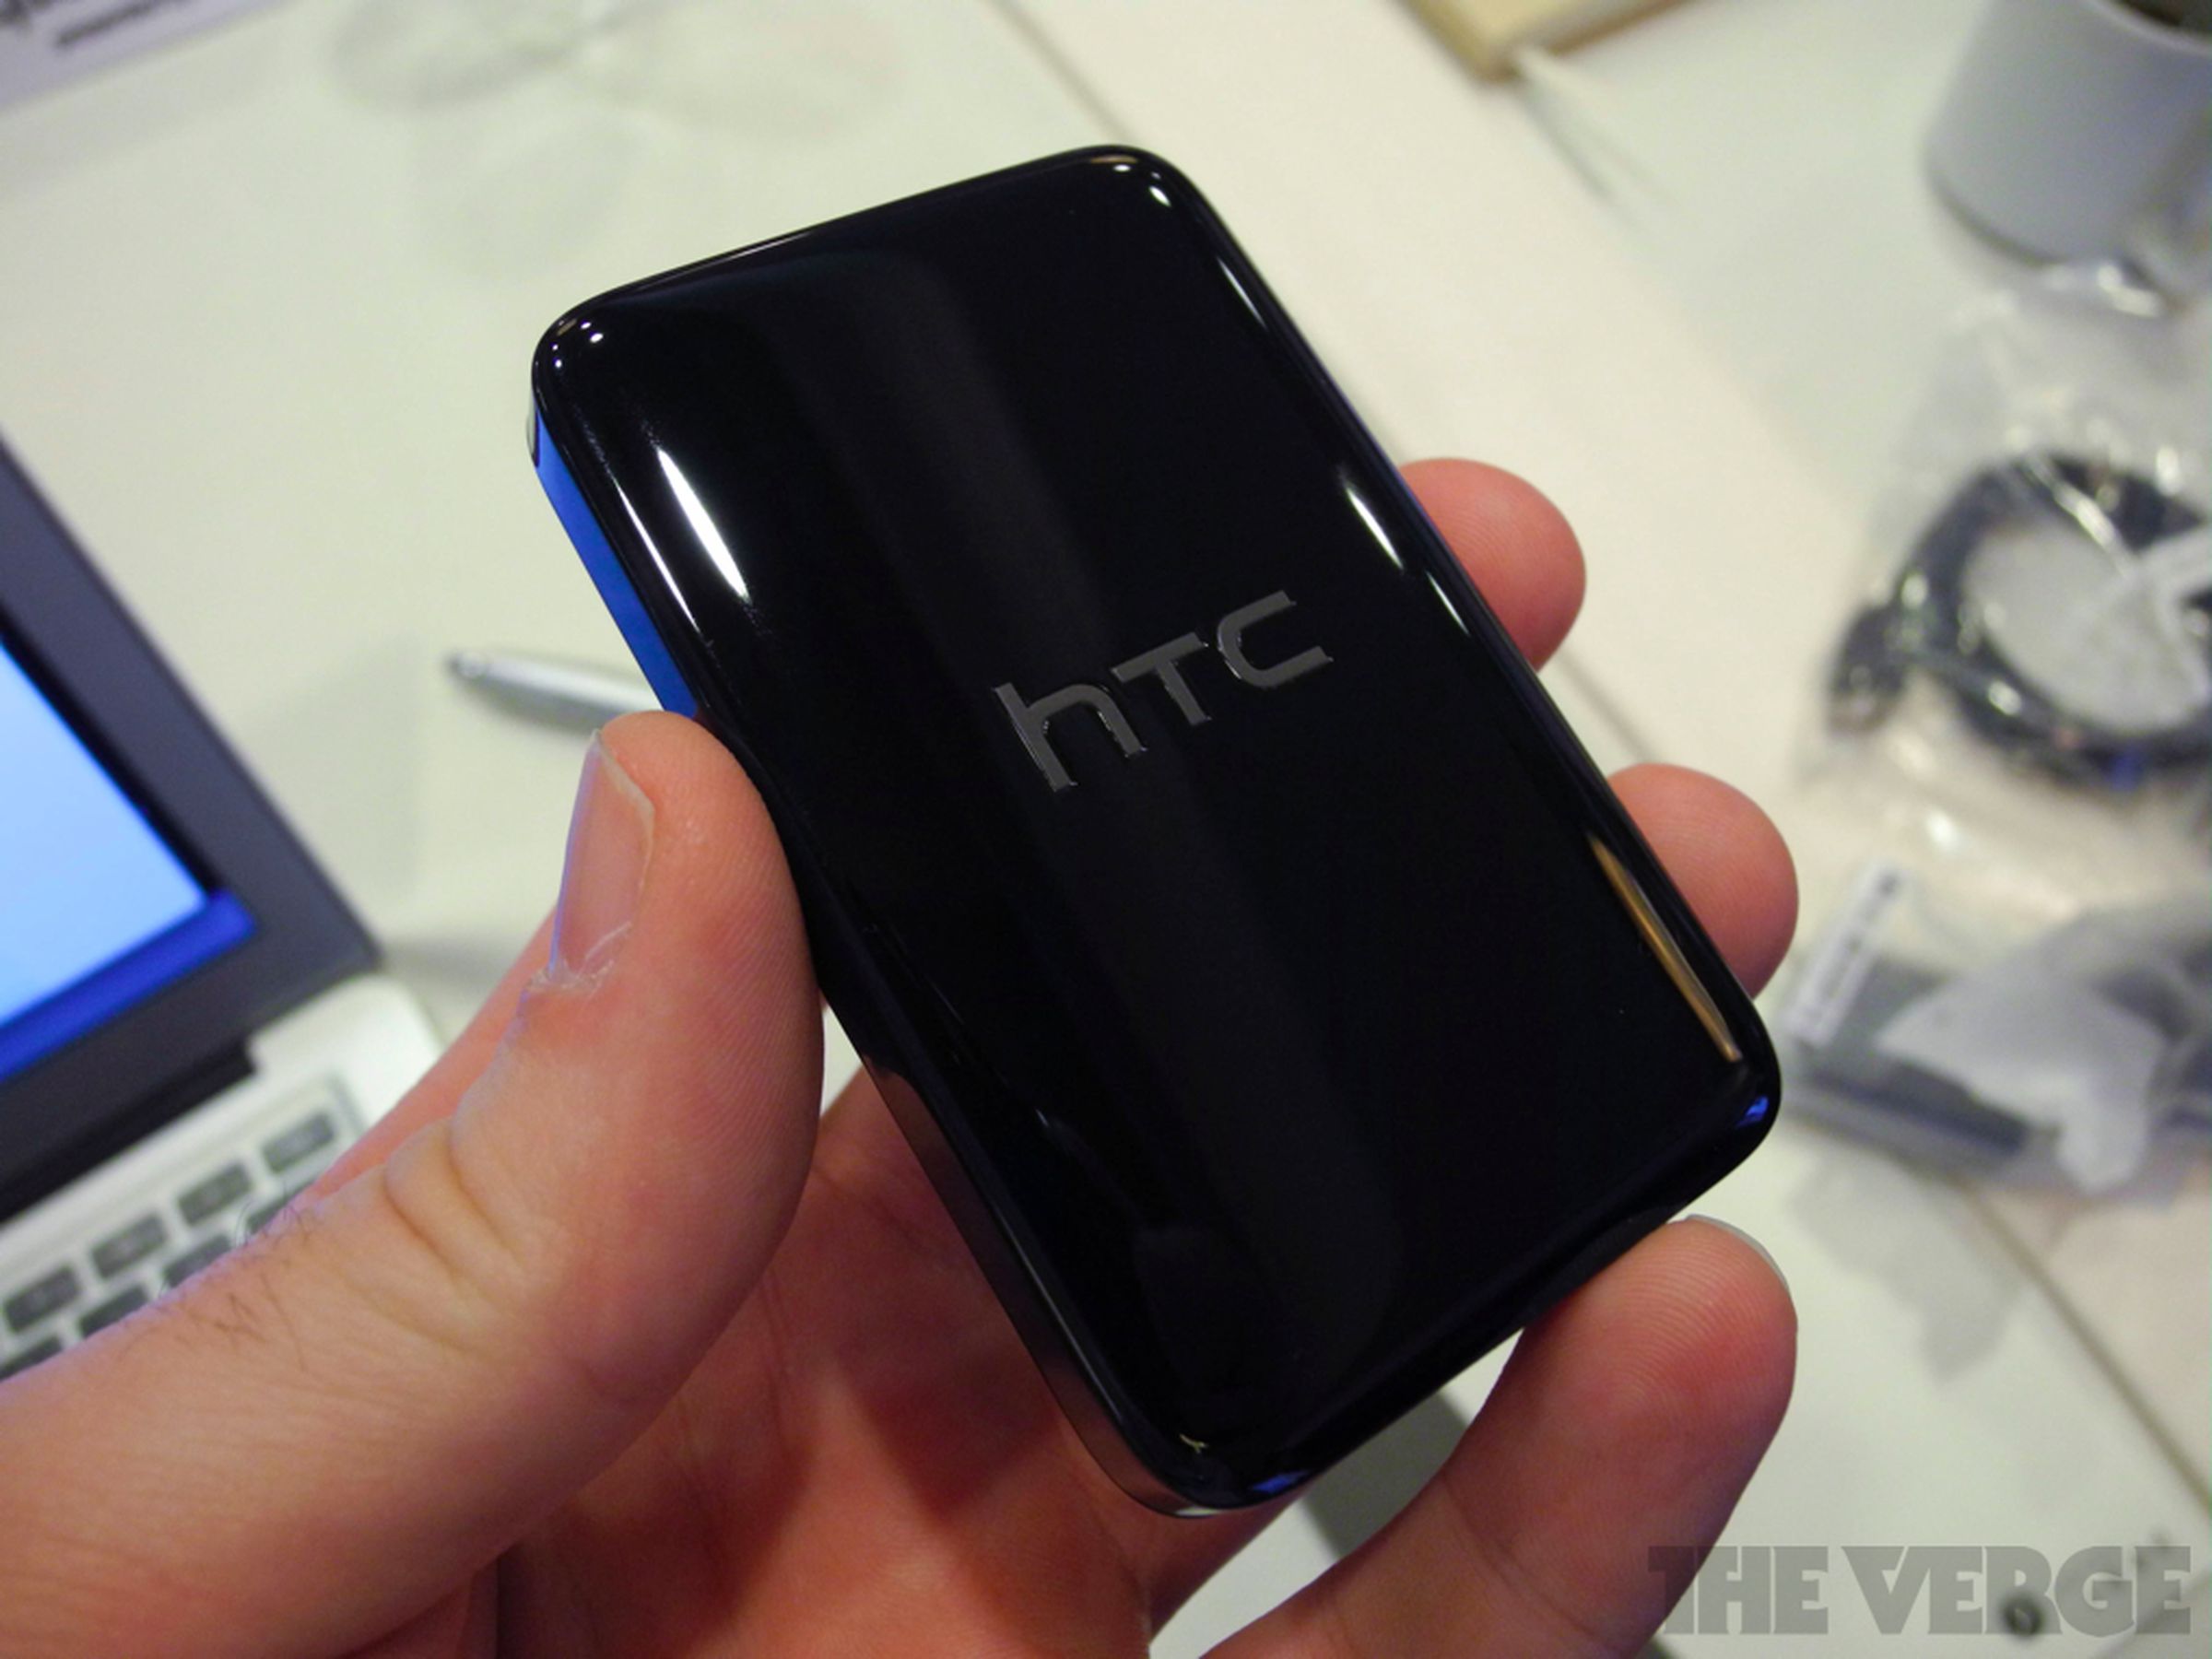 HTC Media Link HD hands-on